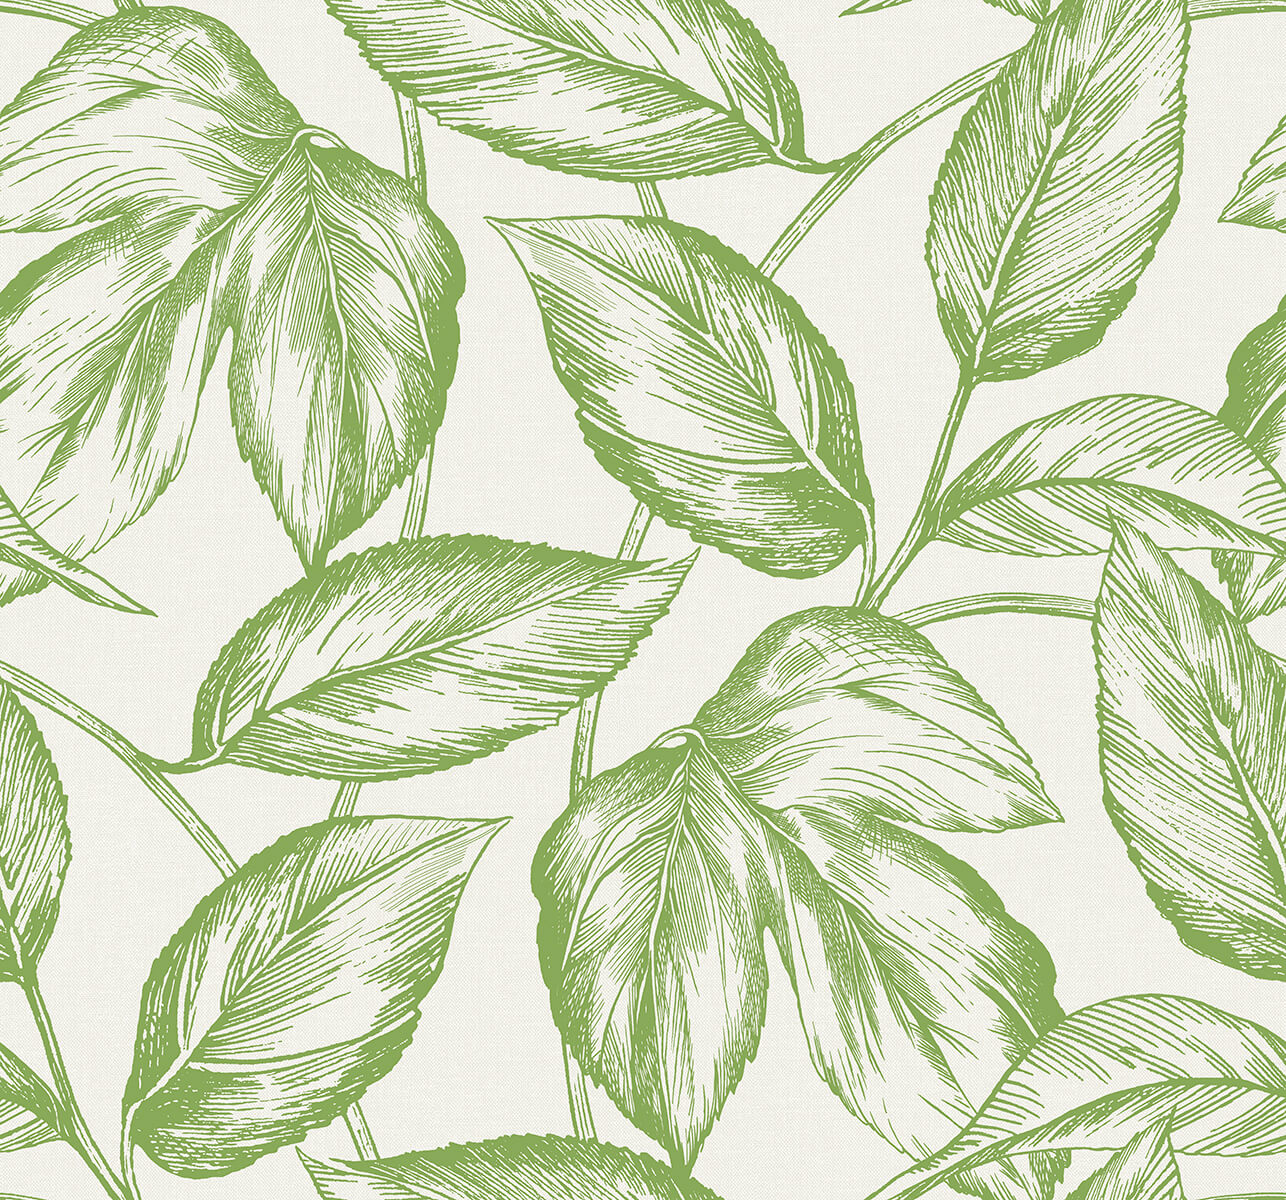 Seabrook Summer House Beckett Sketched Leaves Wallpaper - Apple Green